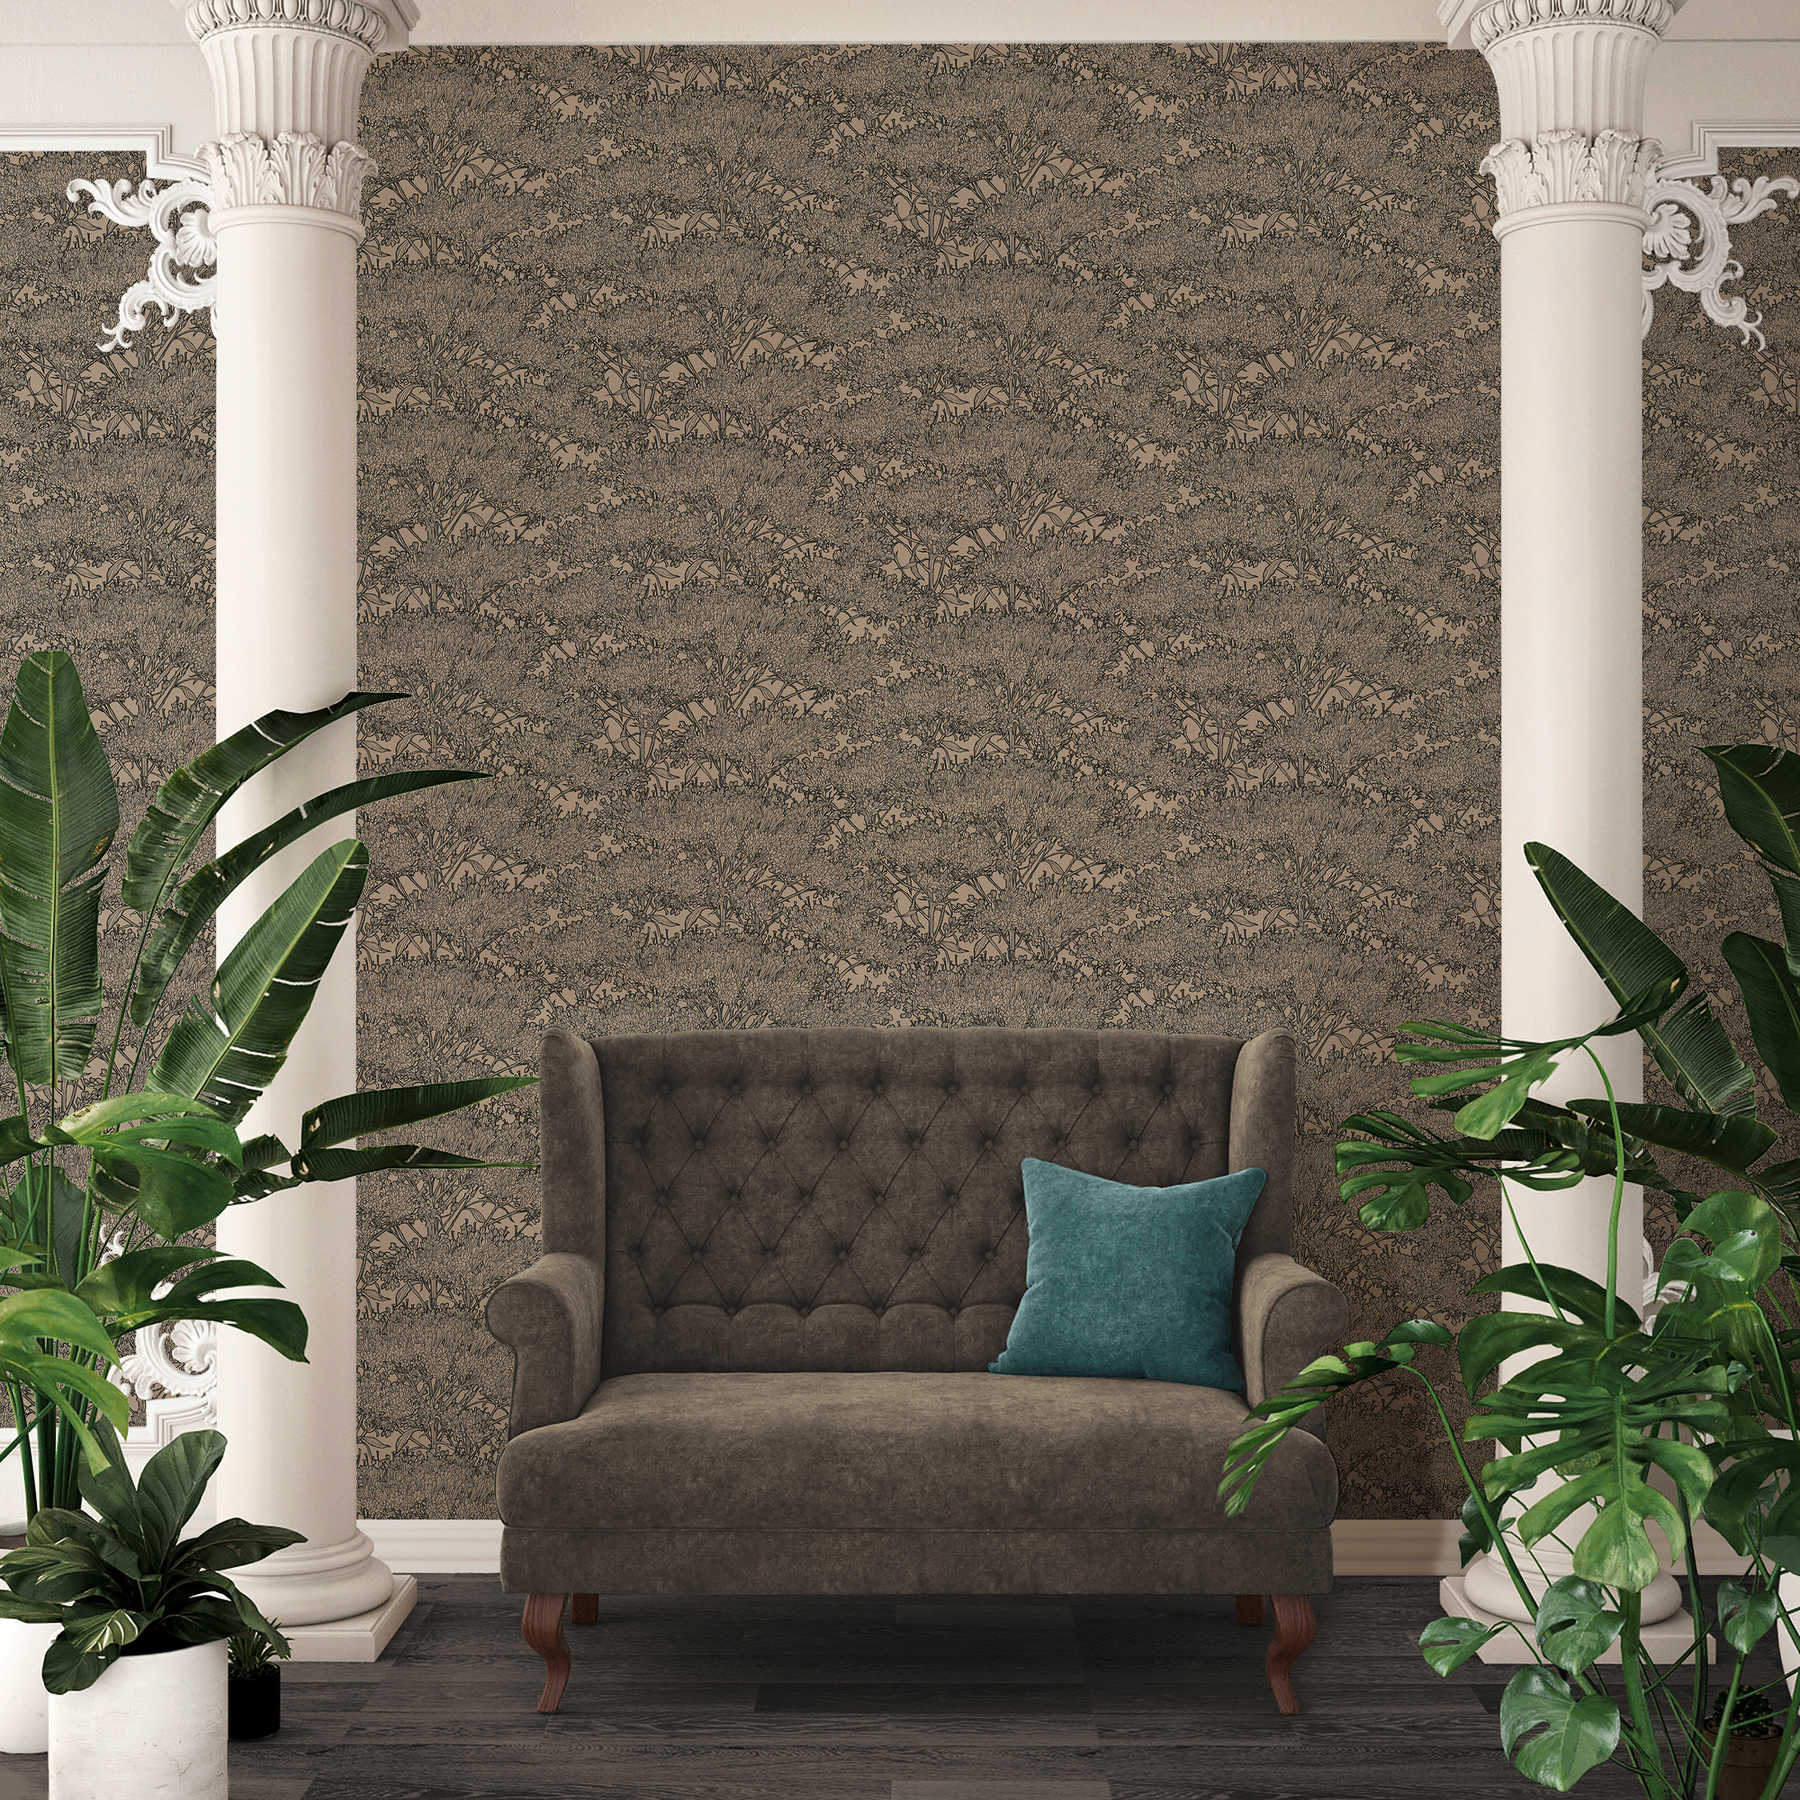             Floral wallpaper in beige with black contours - brown, grey, beige
        